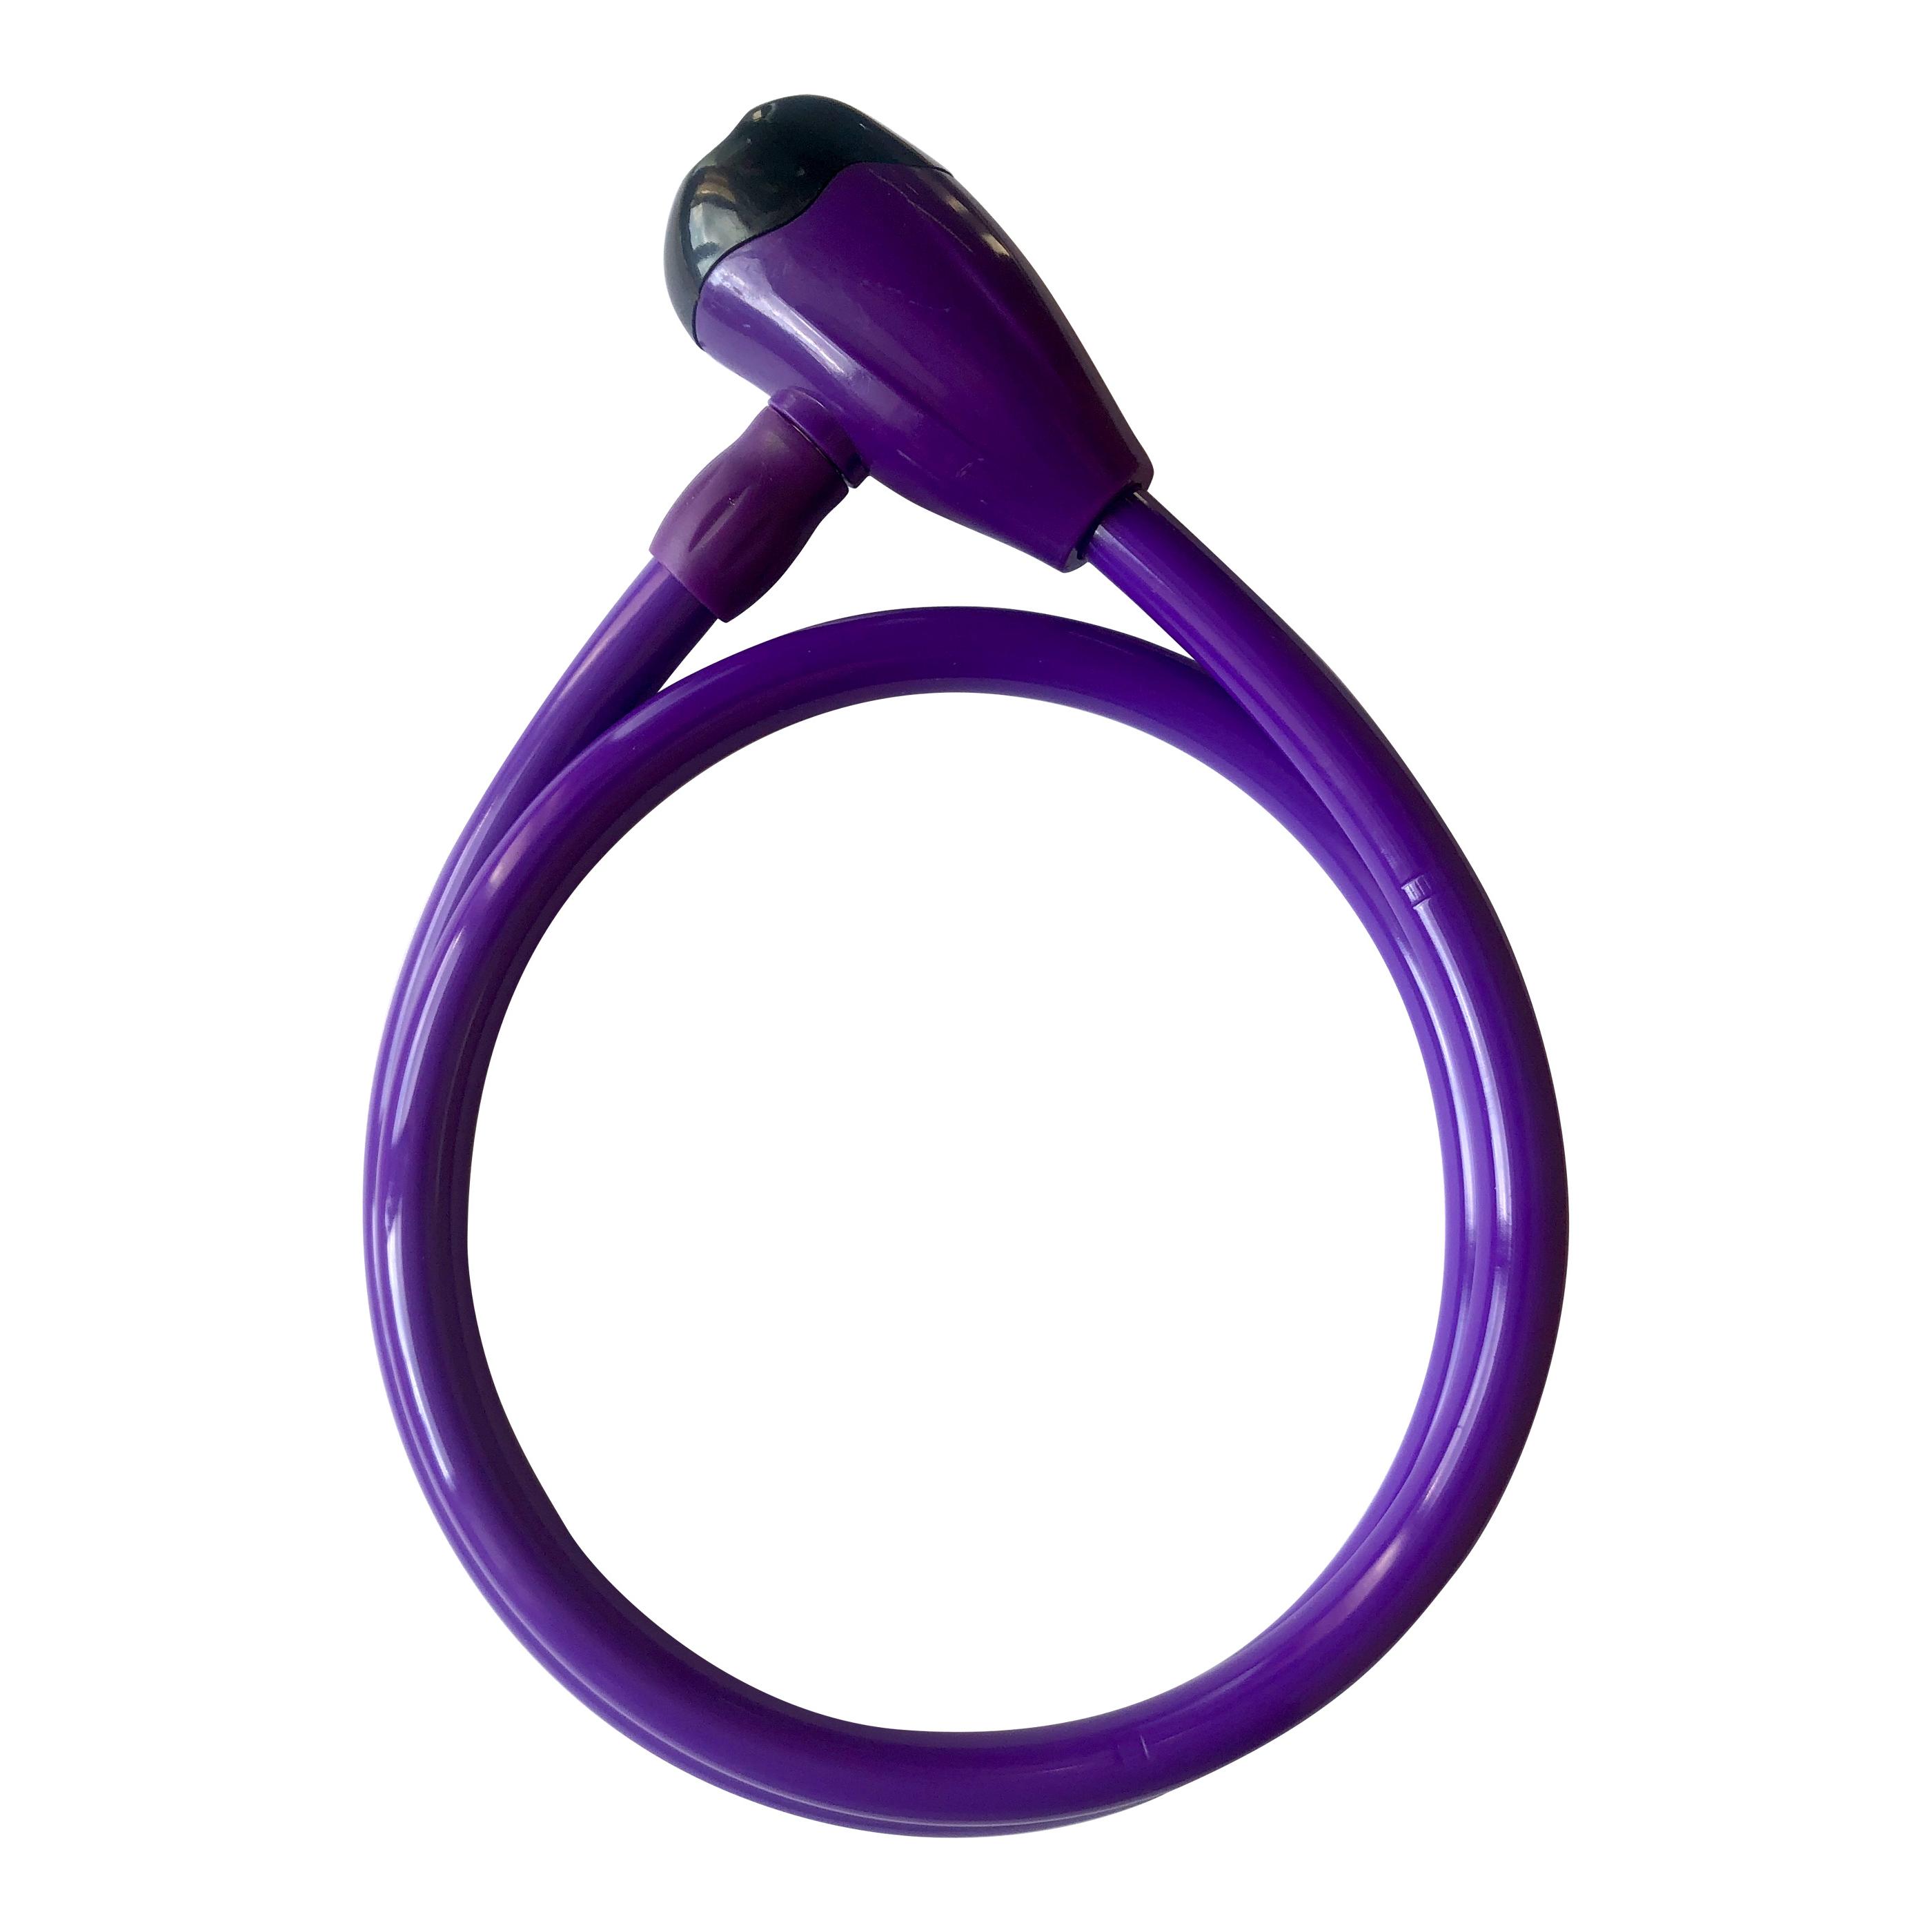 Cable Candado De Acero Golden Key Colores - violeta - 